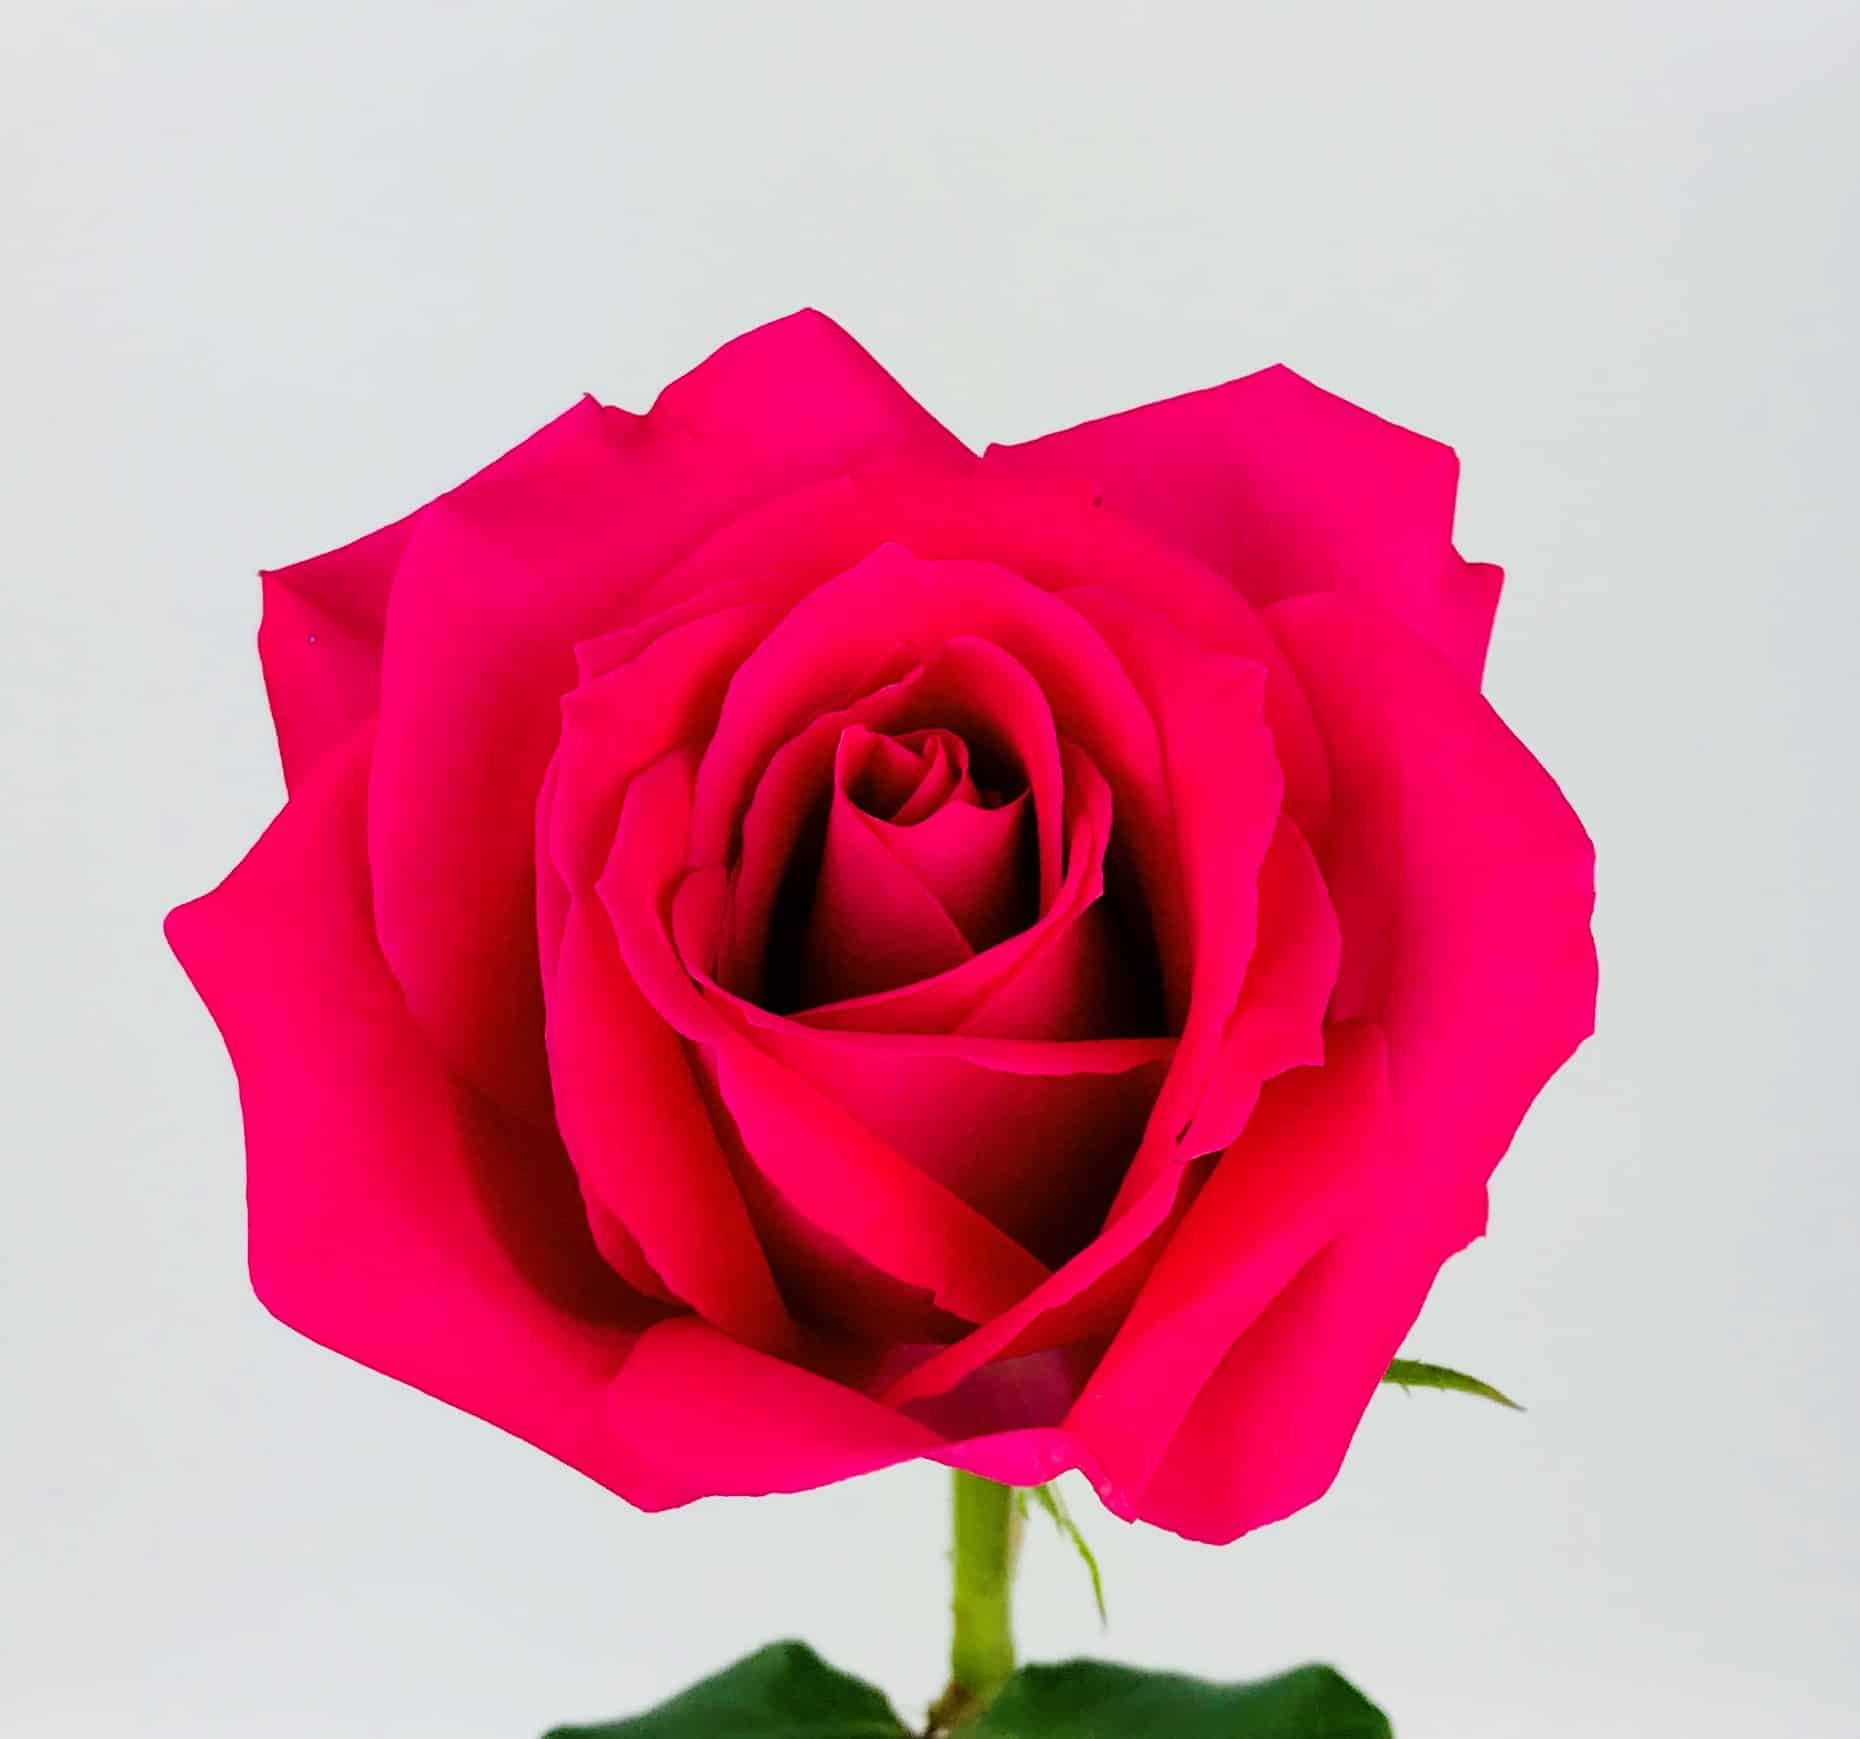 Hot Pink Roses 50 cm - Fresh Cut - 100 Stems